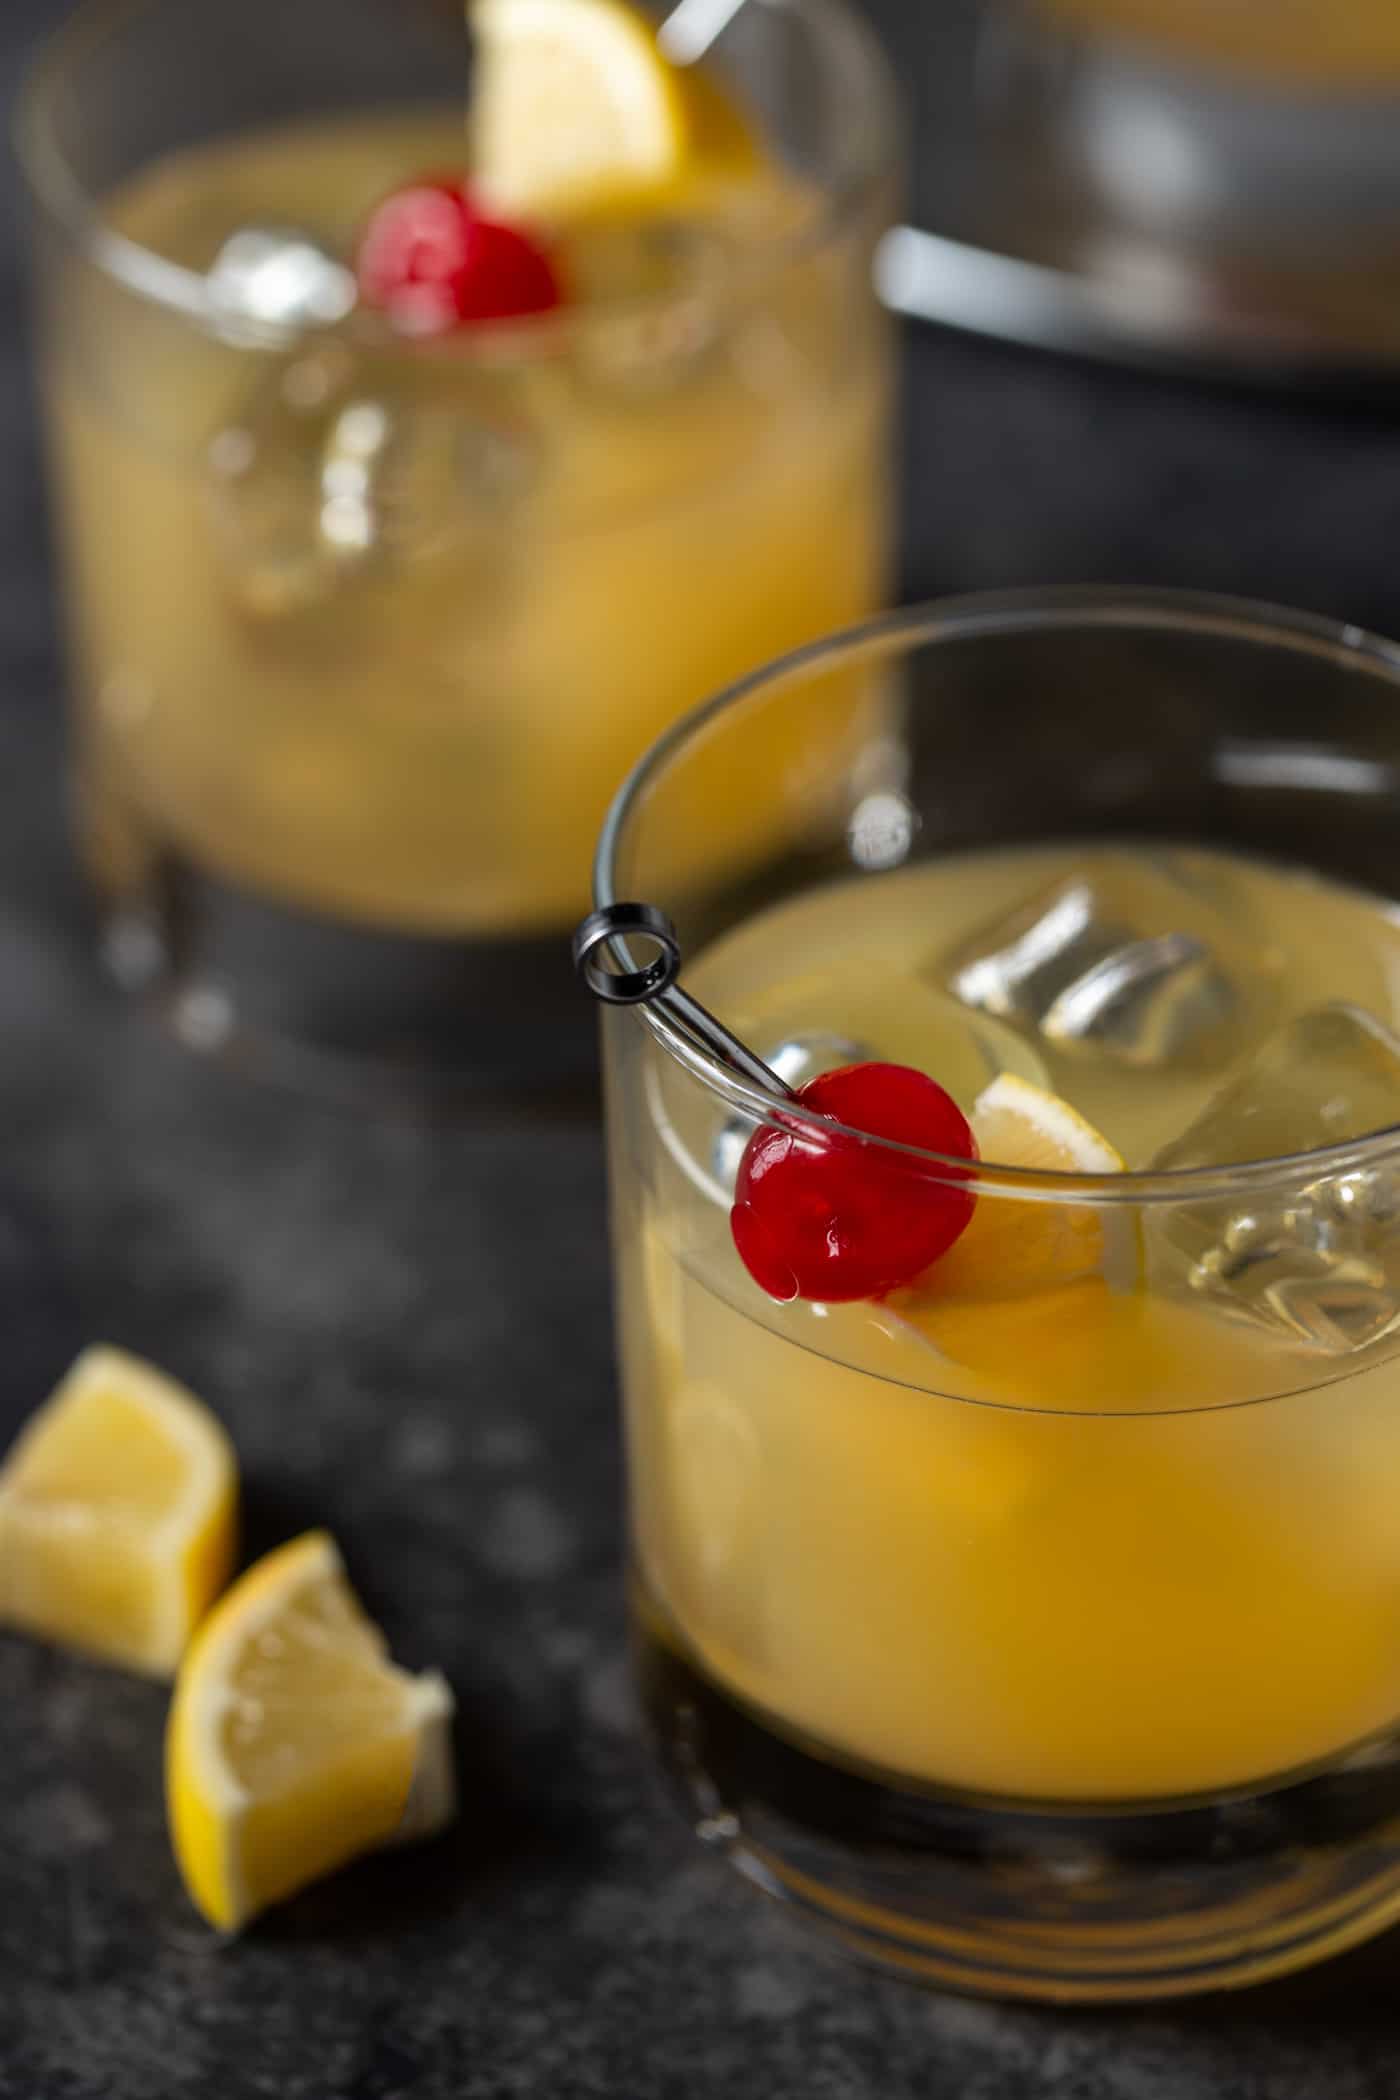 Meyer Lemon Whiskey Sour Recipe Batch Cocktail Garnish With Lemon,Red Cabbage Whole